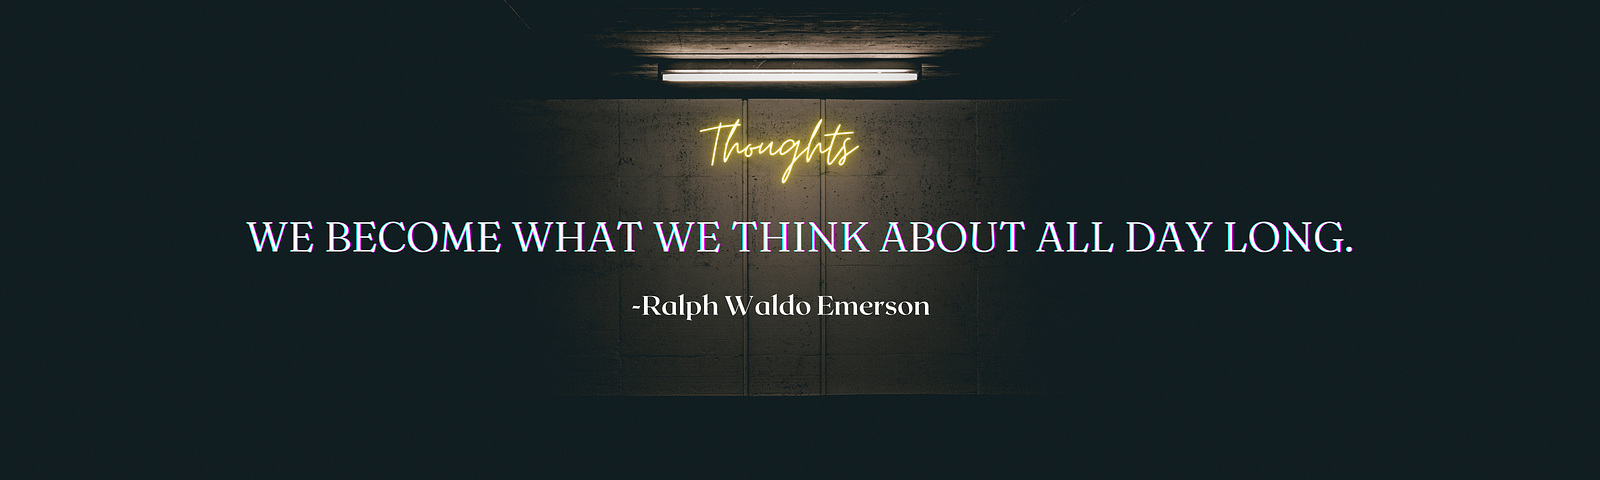 Ralph Waldo Emerson Quote | HBR Patel